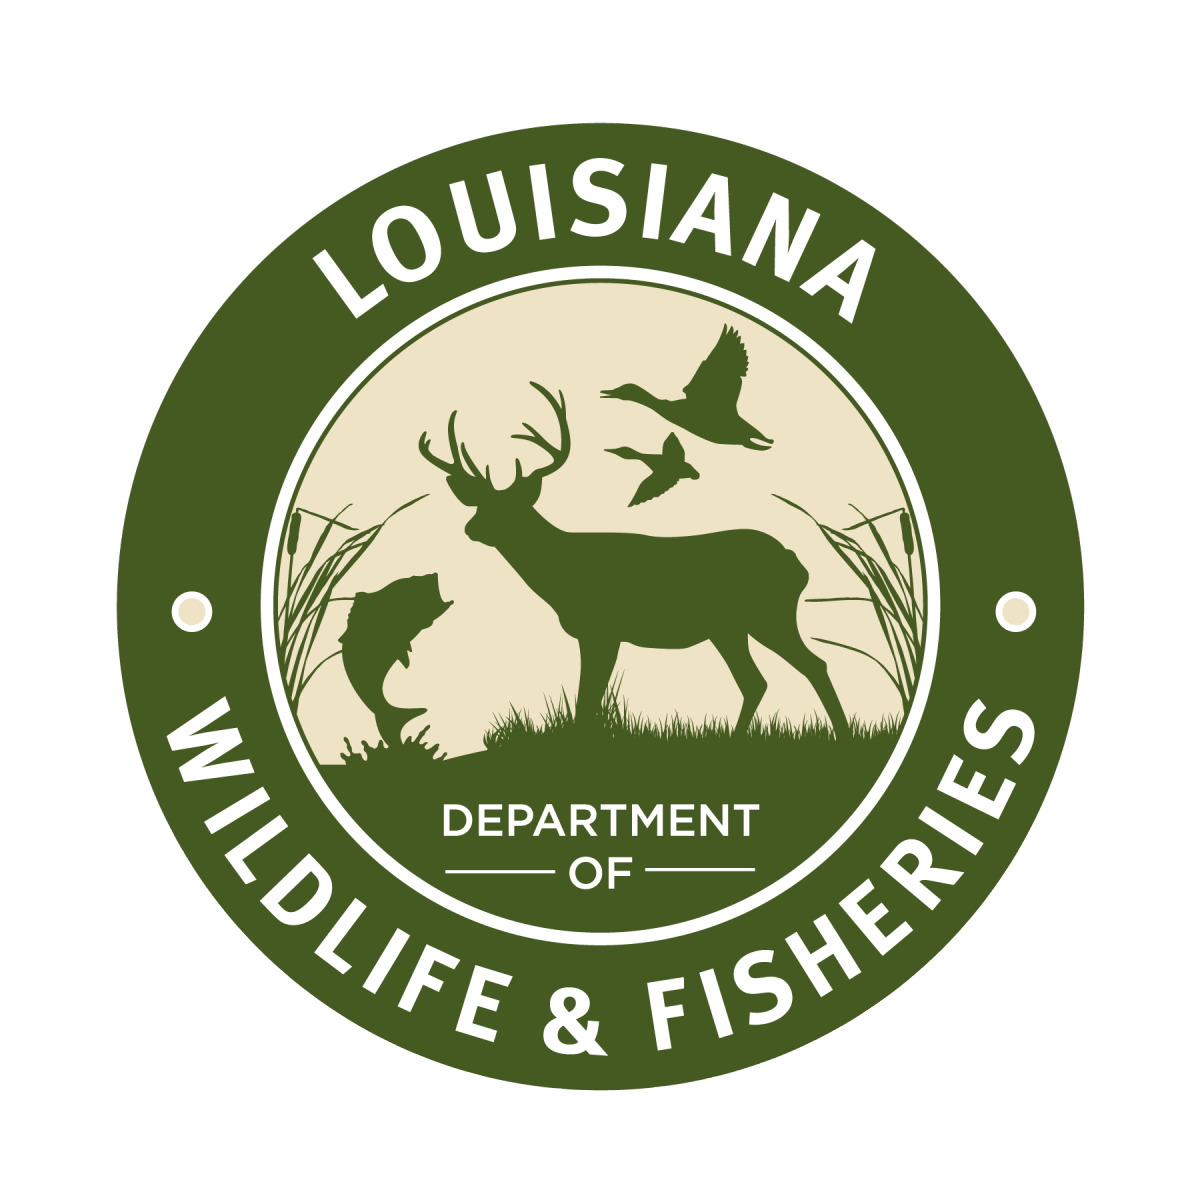 The Louisiana Logo - logo | Louisiana Department of Wildlife and Fisheries